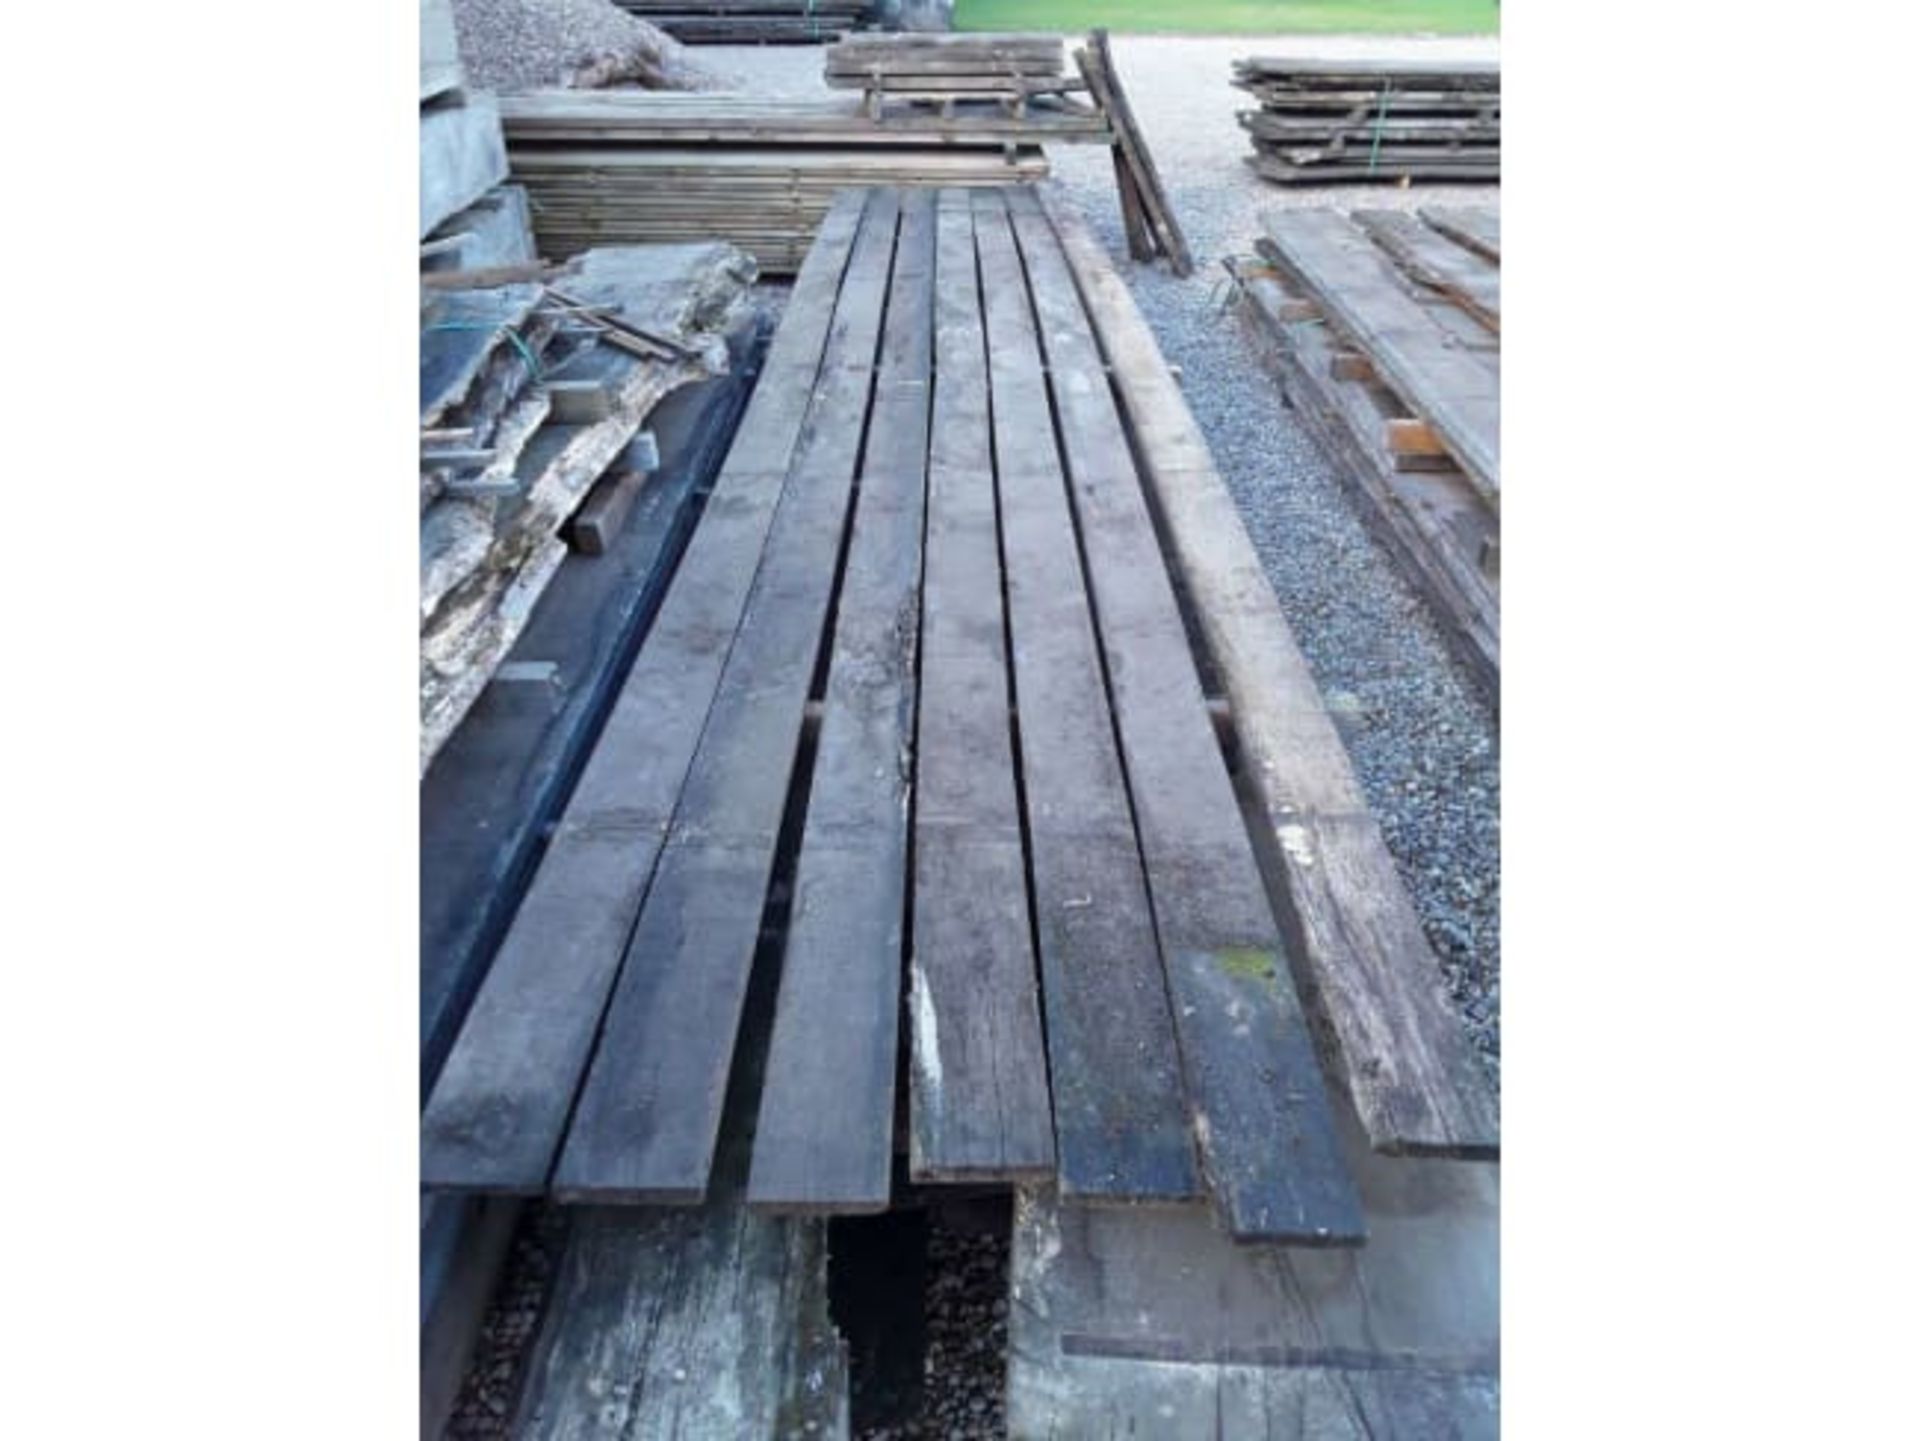 13 x Hardwood Timber Sawn Air Dried English Oak Waney Edge / Live Edge Boards / Slabs / Planks - Image 7 of 7